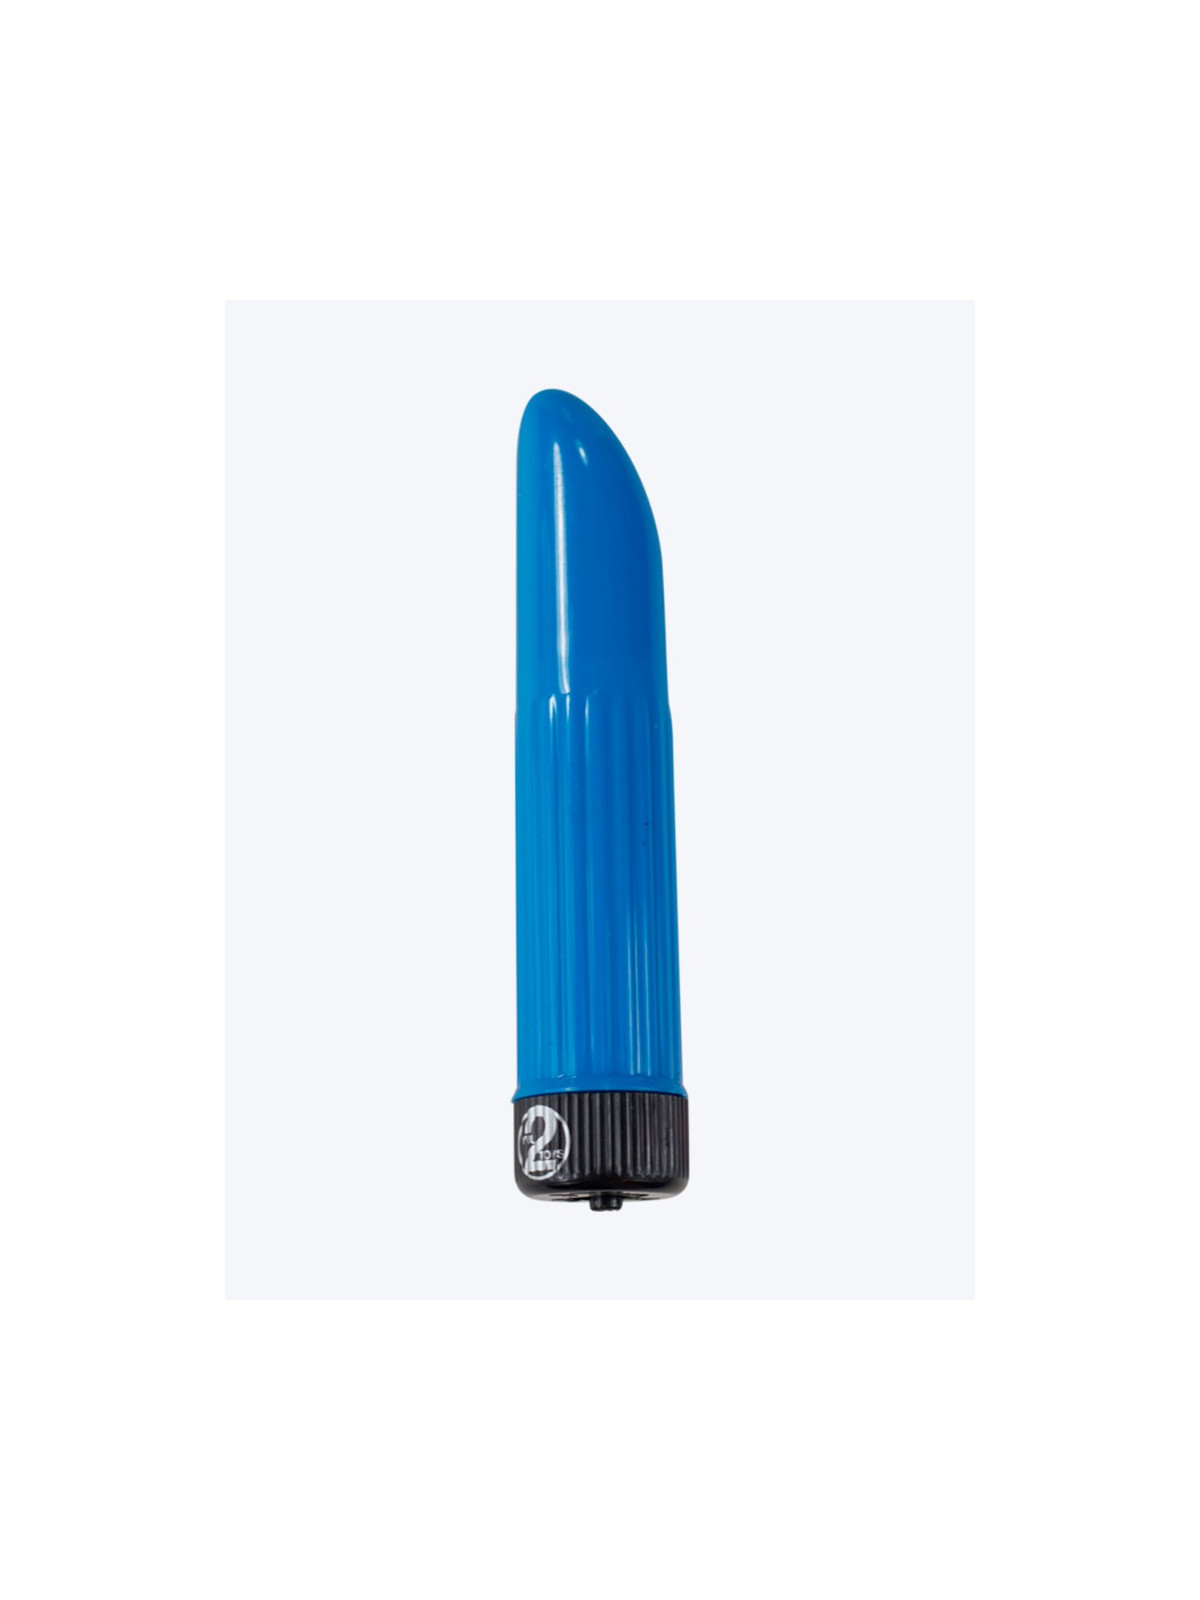 Lady Finger vibrator Smurf